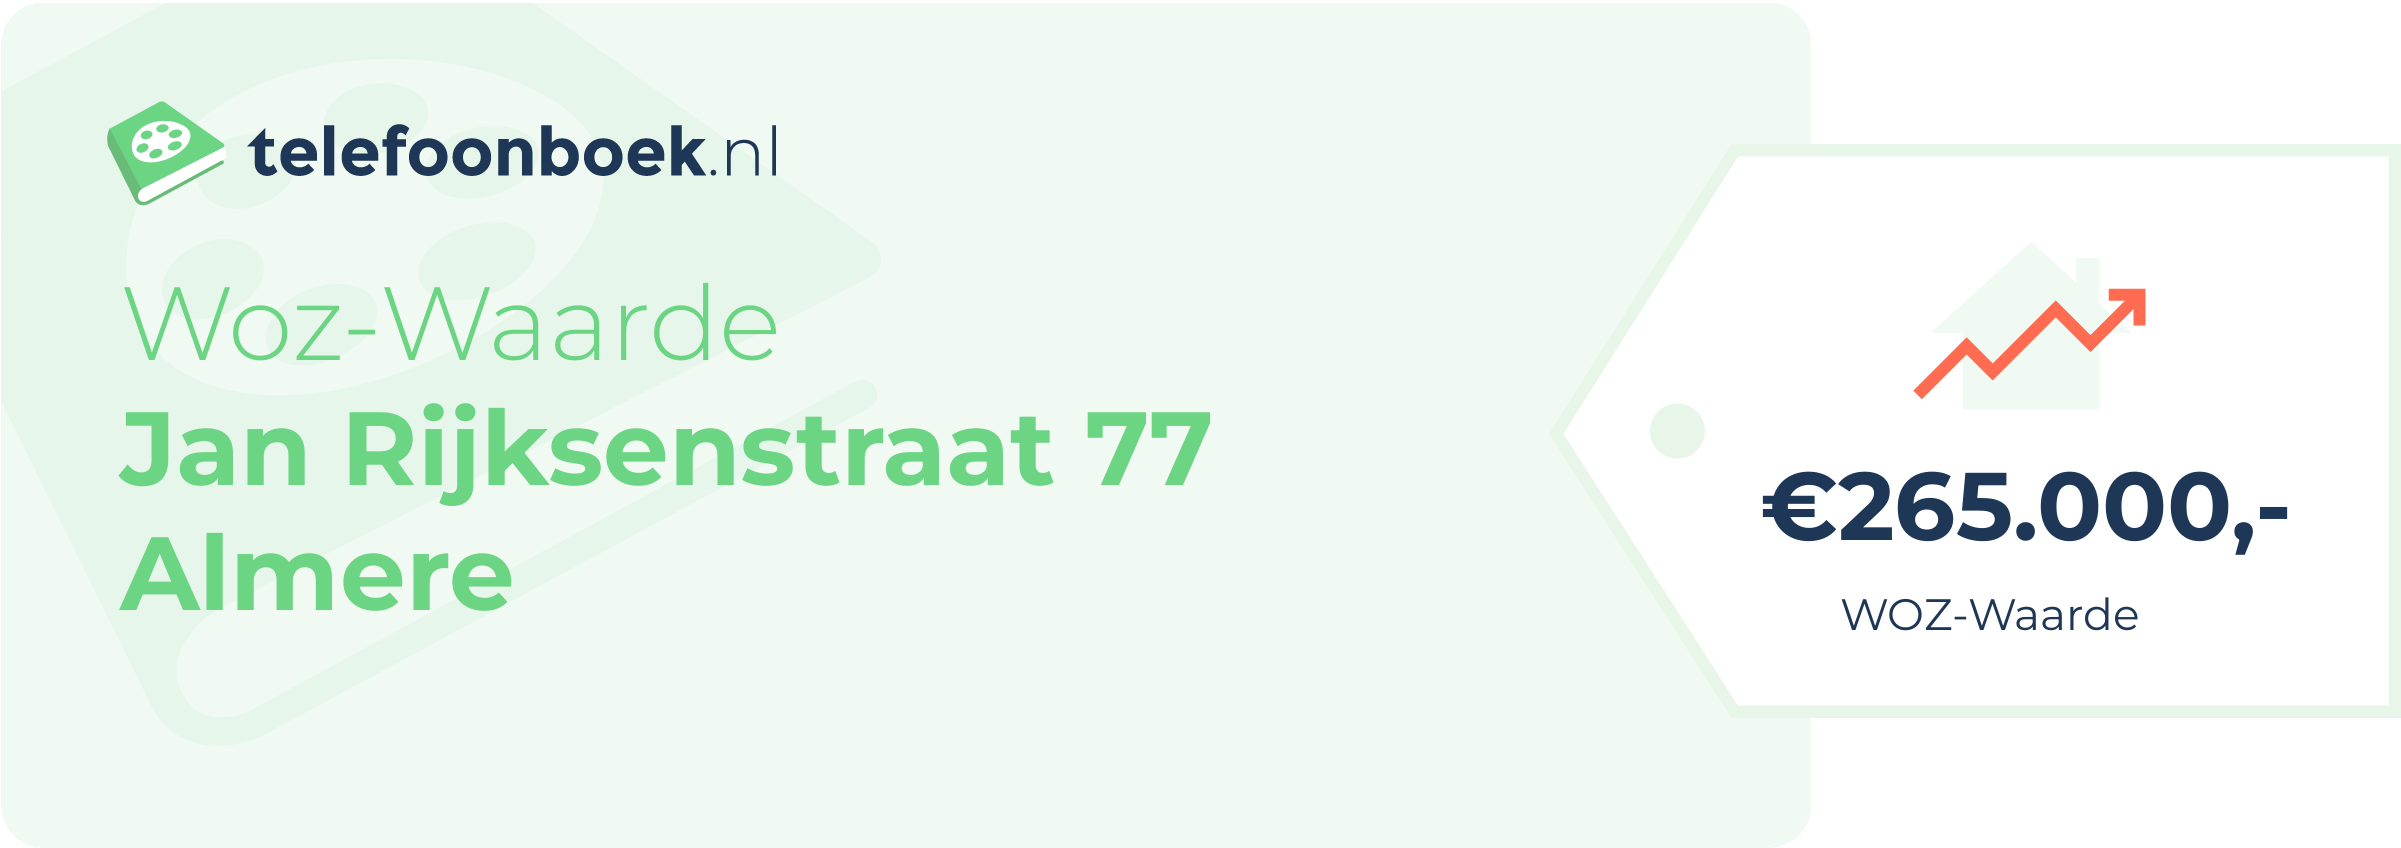 WOZ-waarde Jan Rijksenstraat 77 Almere